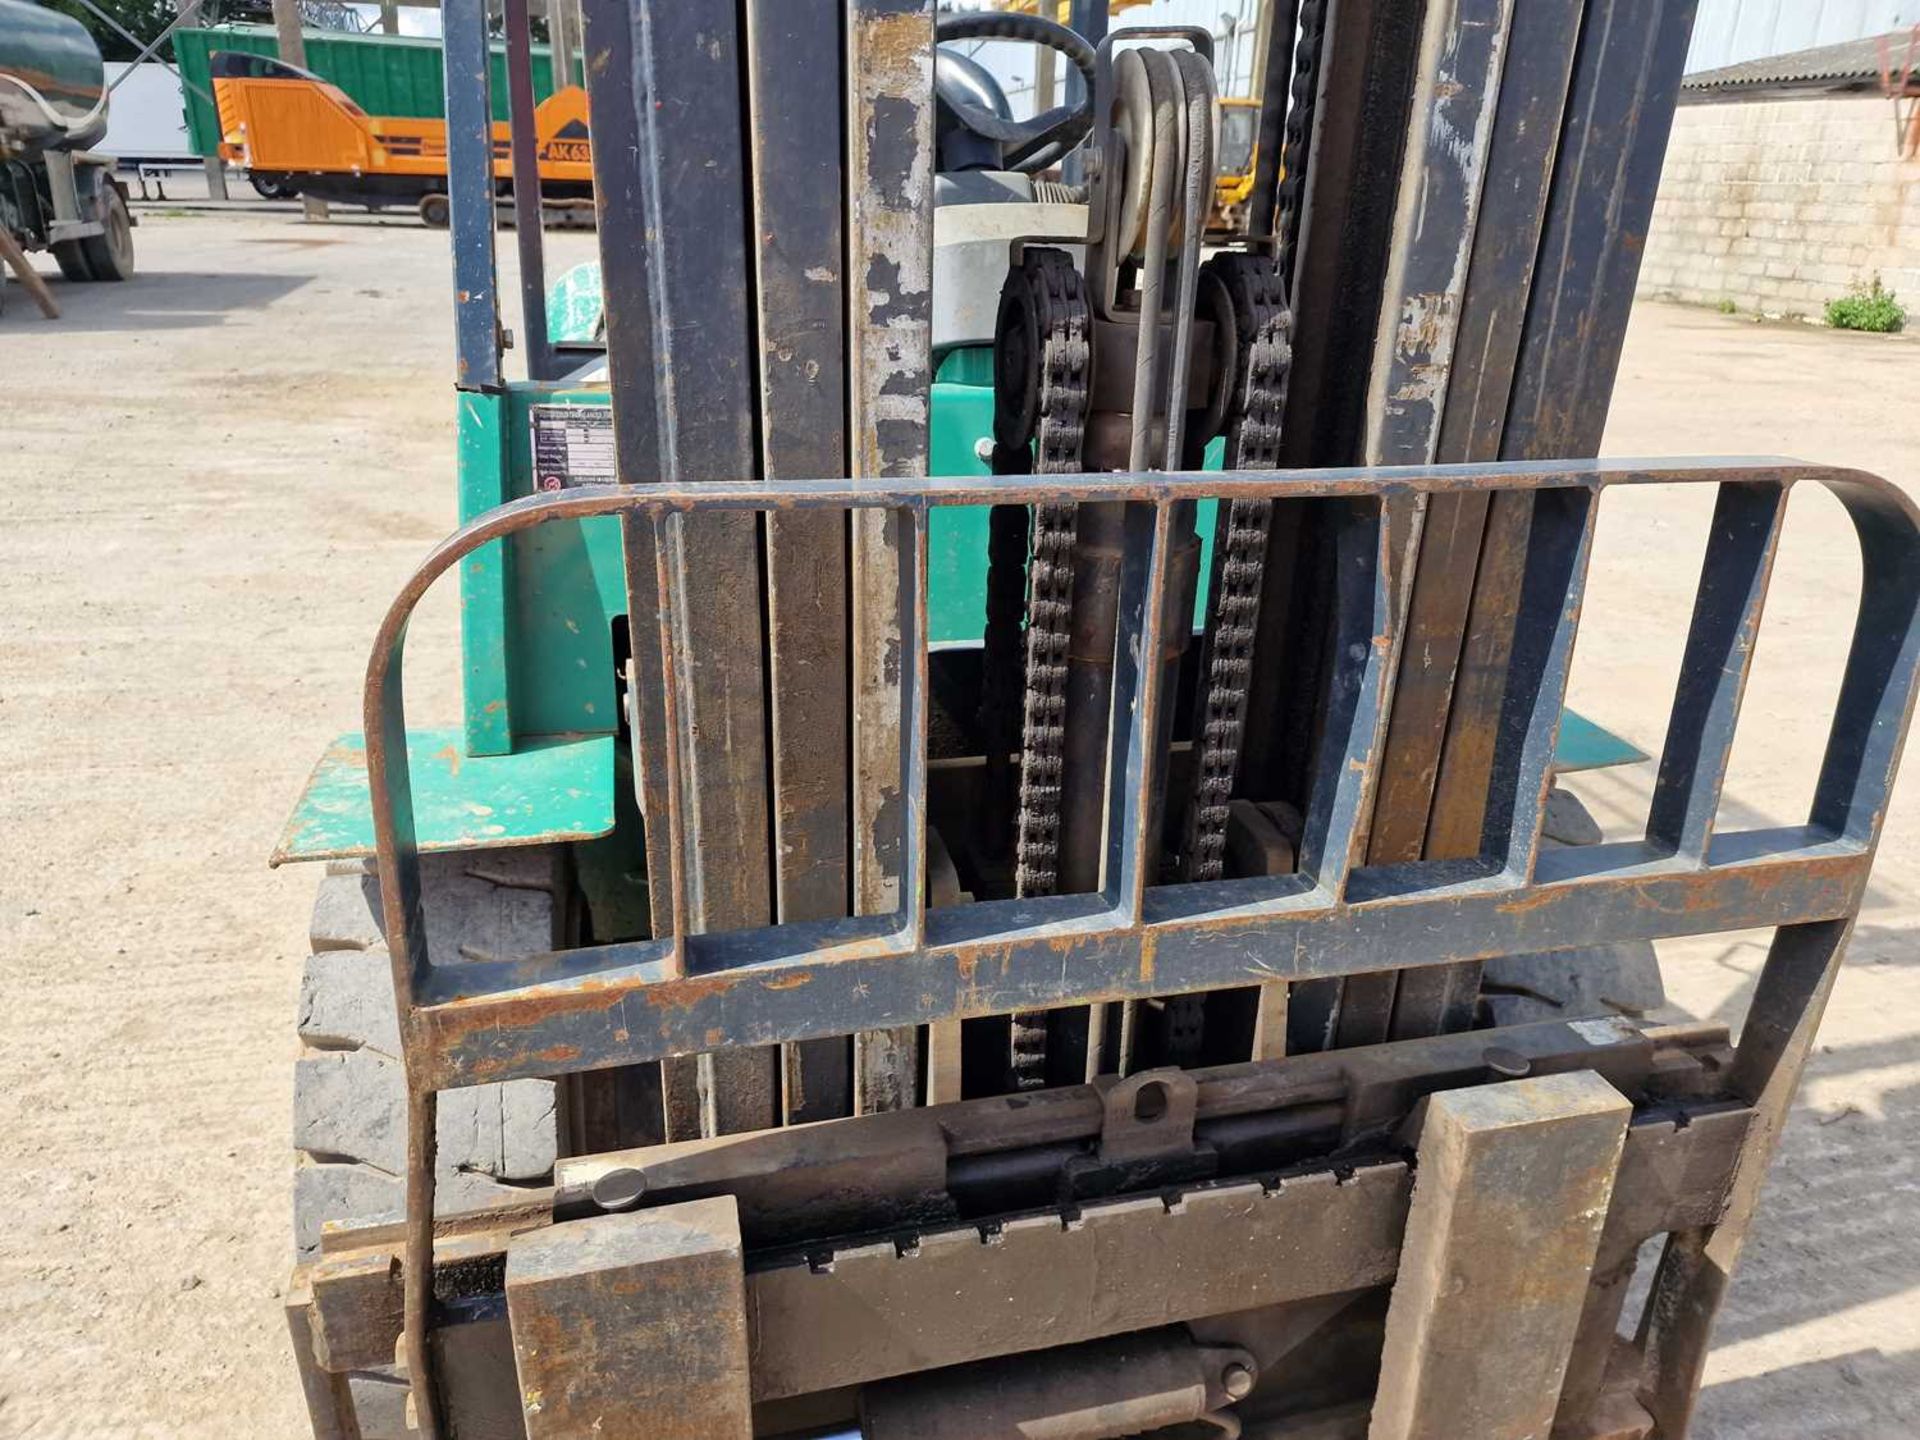 2015 Zhejiang FD40T 4 Ton Diesel Forklift, 3 Stage Free Lift Mast, Side Shift, Forks - Image 7 of 38